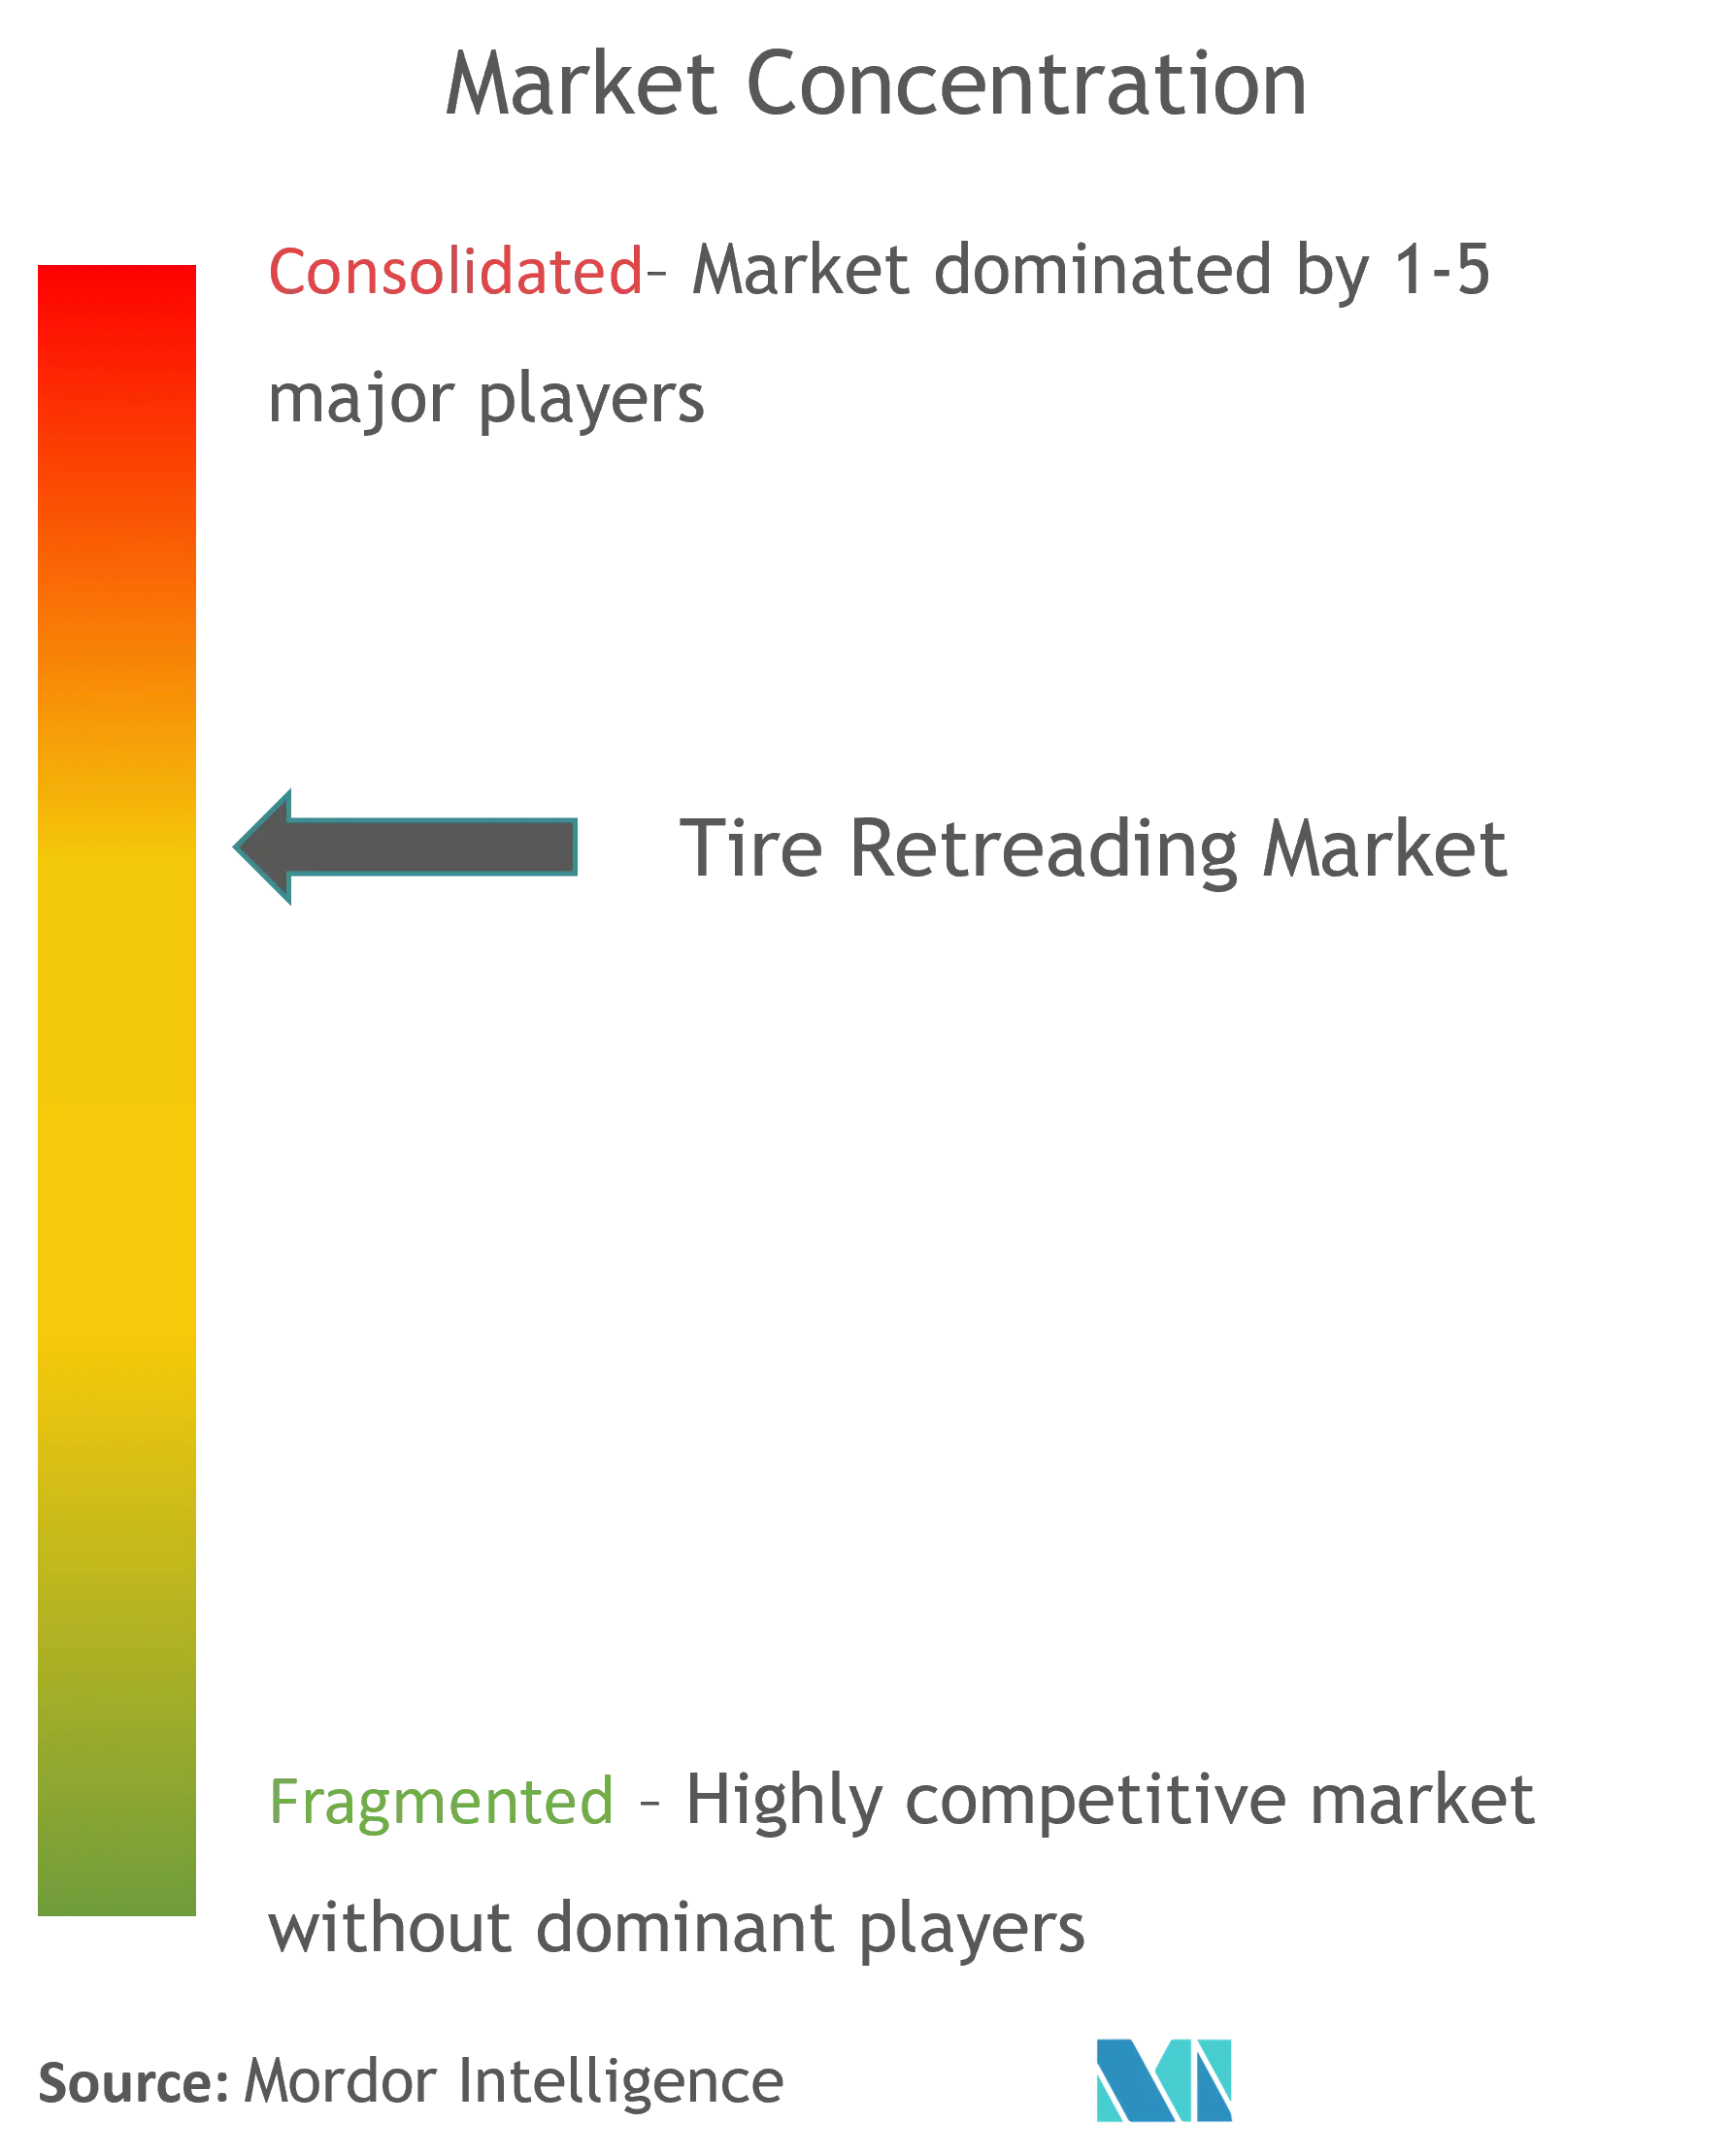 Market Concentration_Tire Retreading Market.png